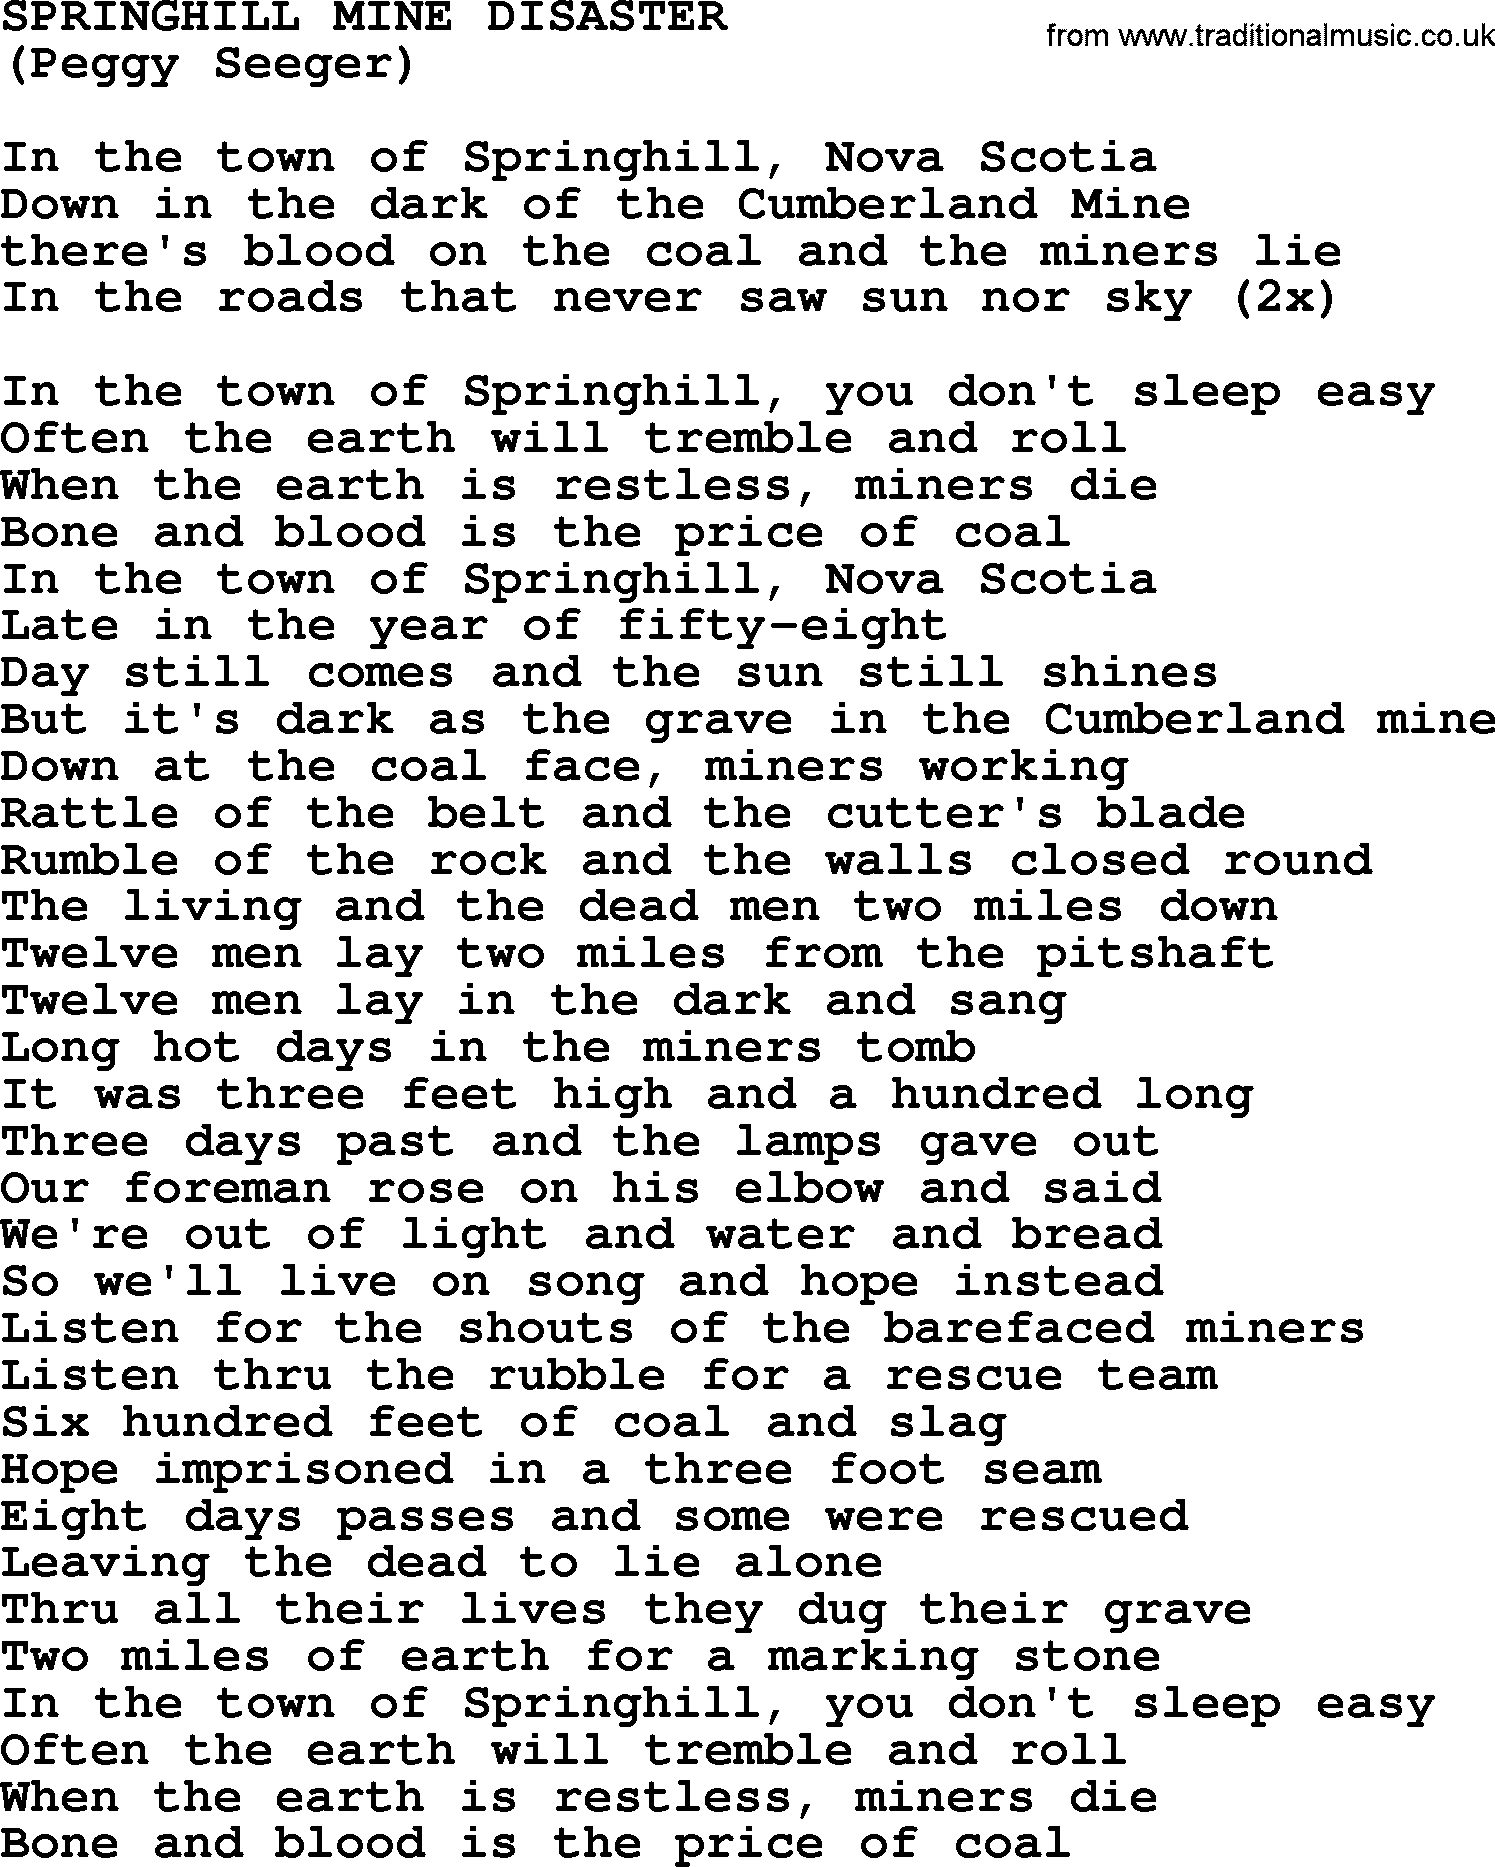 The Byrds song Springhill Mine Disaster, lyrics